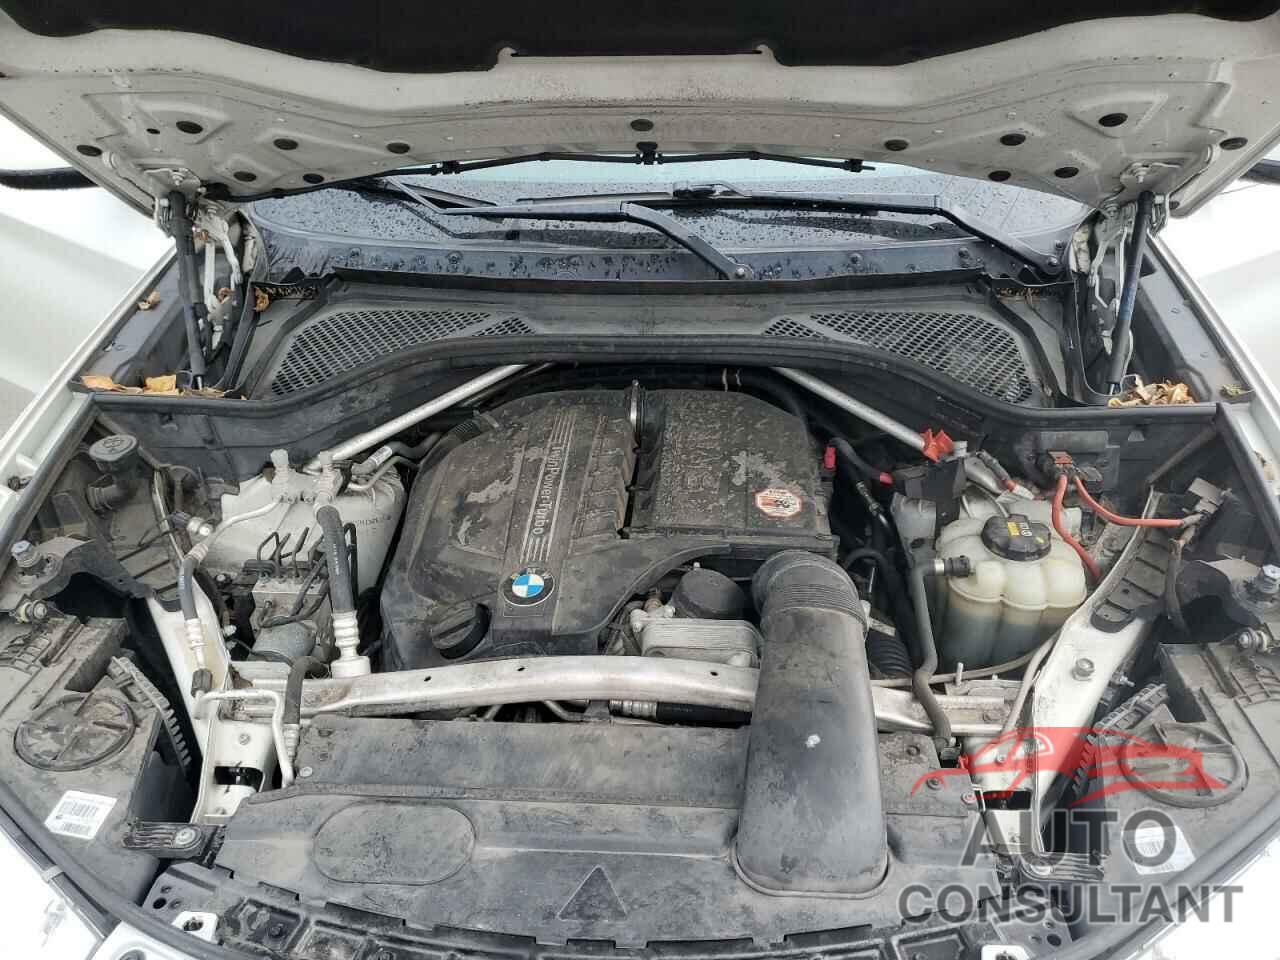 BMW X5 2017 - 5UXKR0C58H0V65029